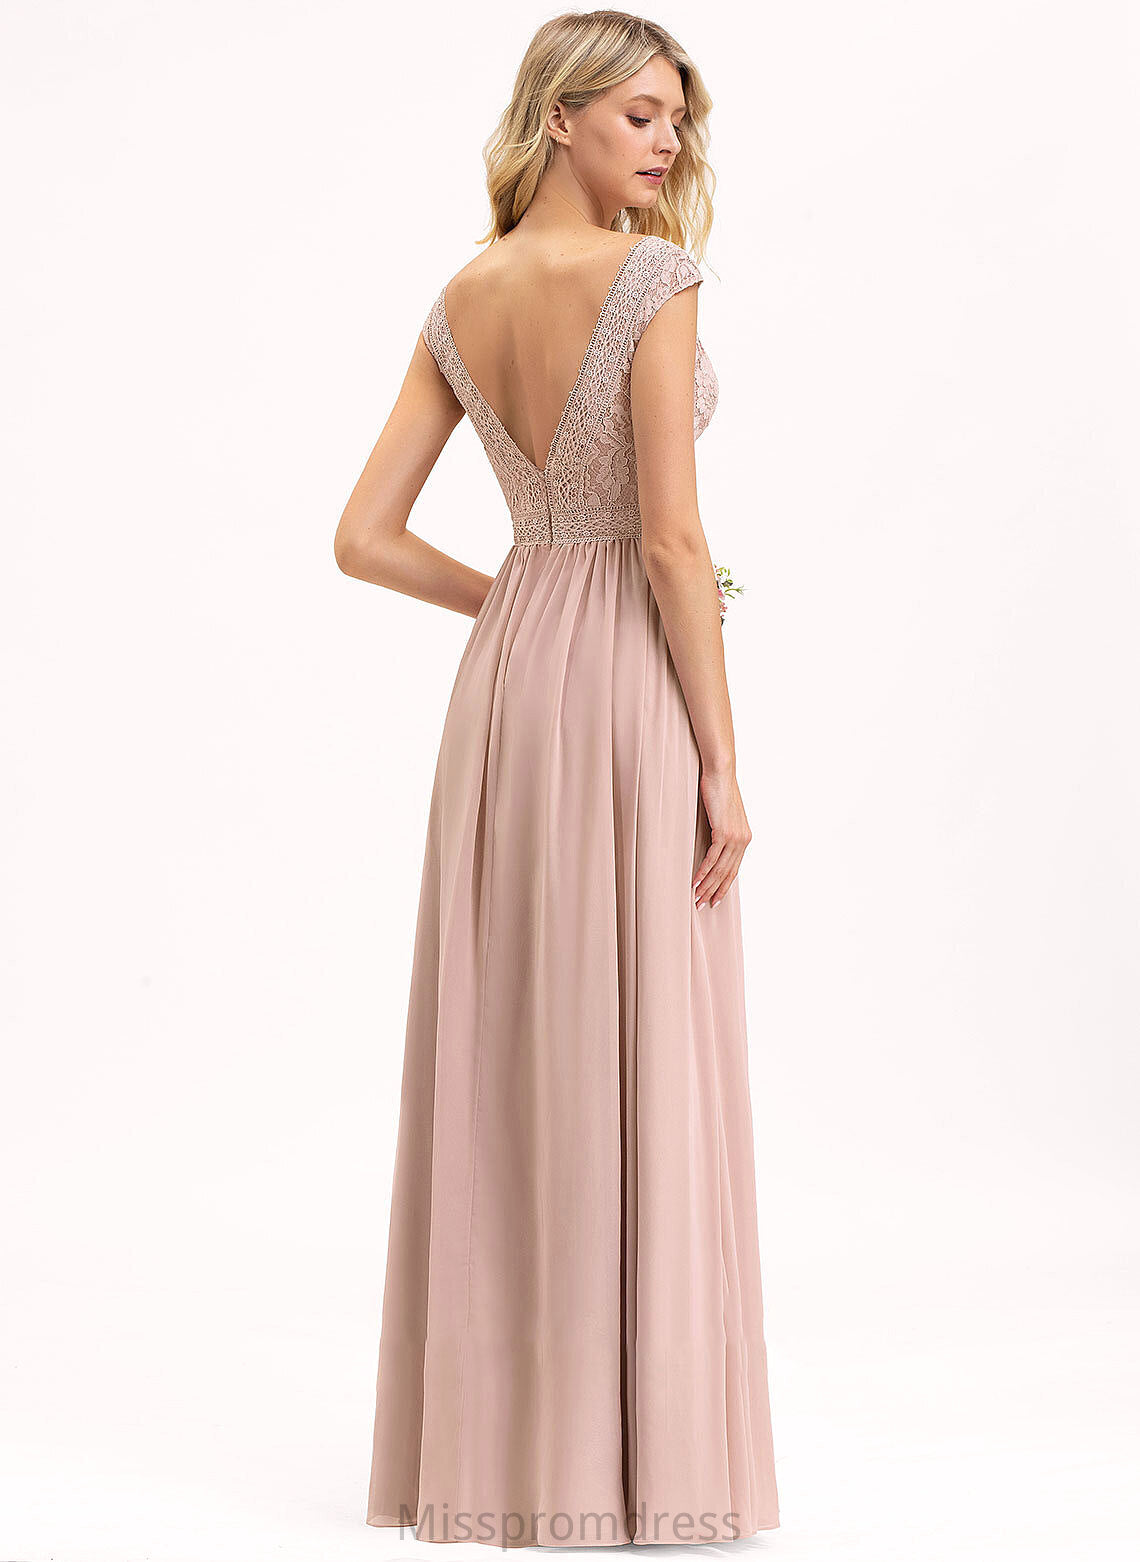 V-neck Straps Silhouette Neckline Lace Floor-Length Fabric A-Line Length Dylan V-Neck Natural Waist Bridesmaid Dresses